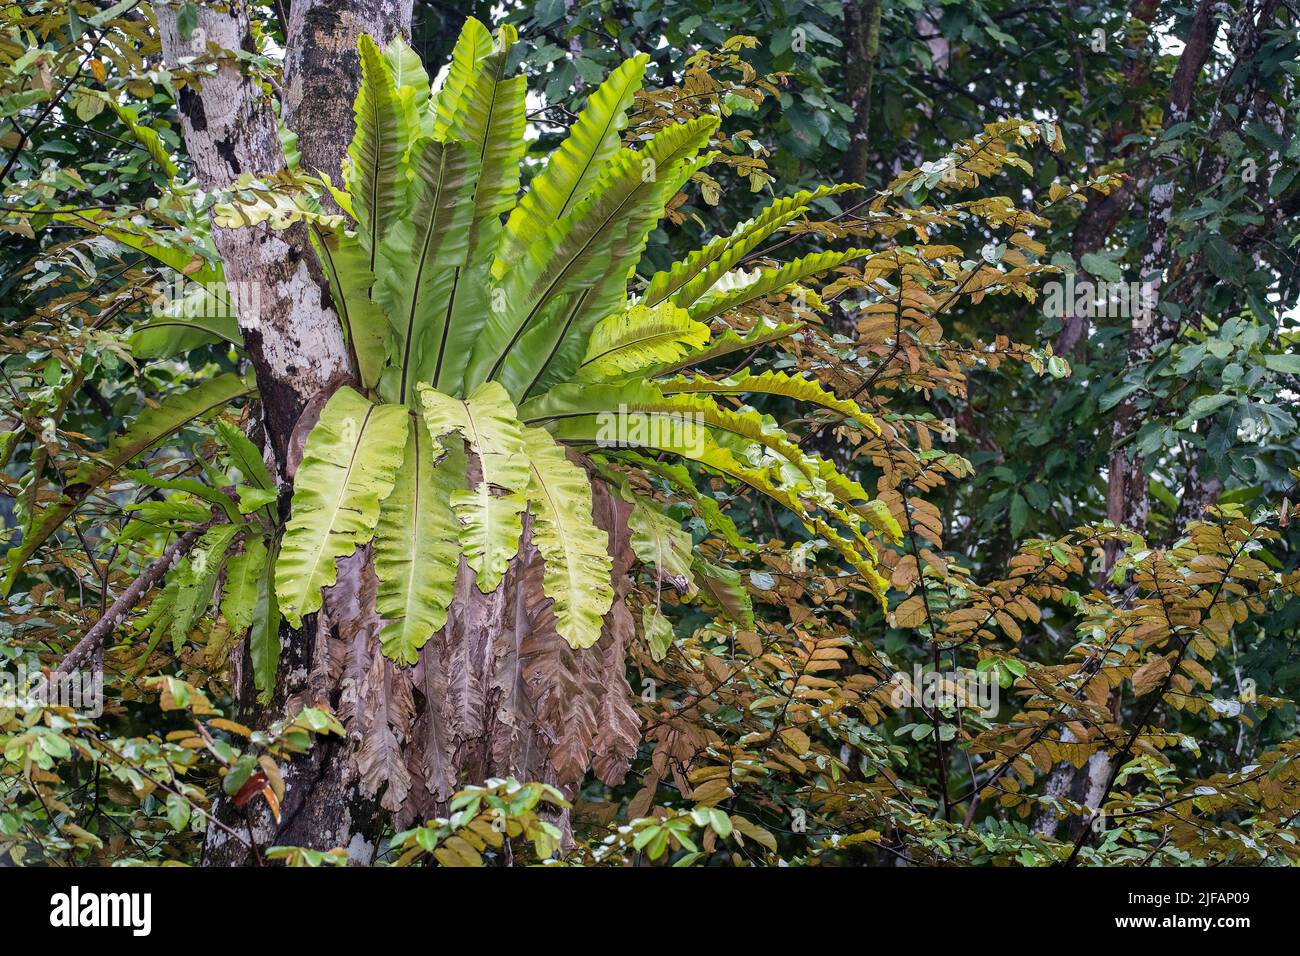 Bird's-nest fern (Asplidium sp.) from Deramakot Forest Reserve, Sabah, Borneo (Malaysia). Stock Photo